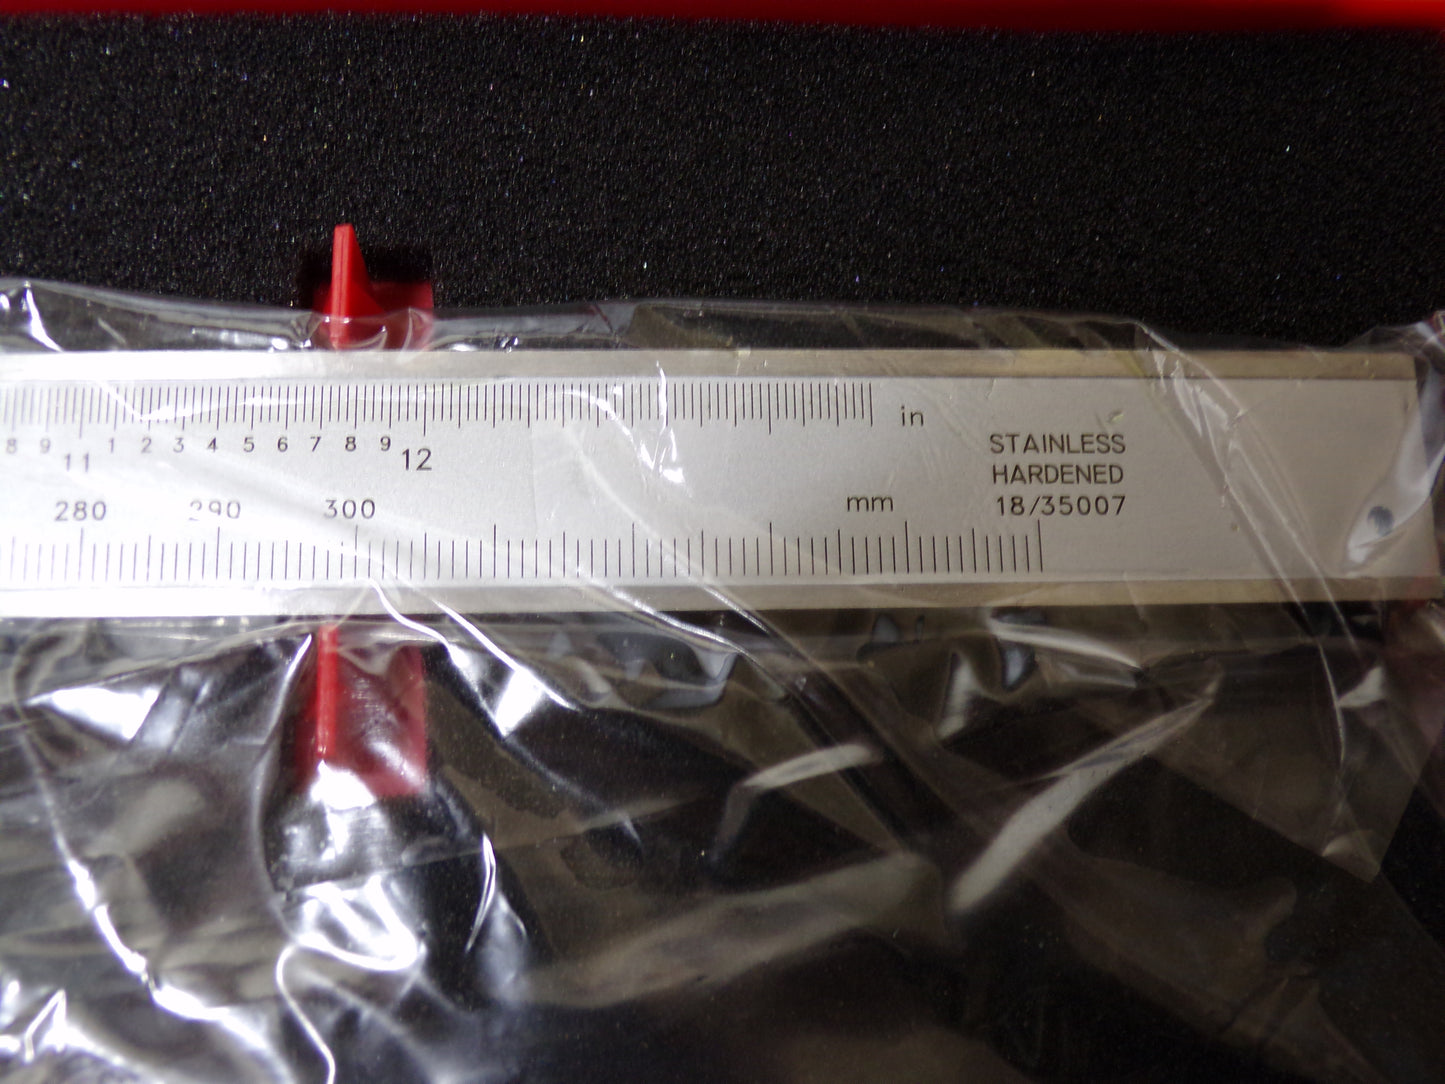 Starrett 0 to 12" Stainless Steel Vernier Caliper 0.02mm Graduation, 0.025 (Per 300mm)mm Accuracy (CR00656-WTA16)